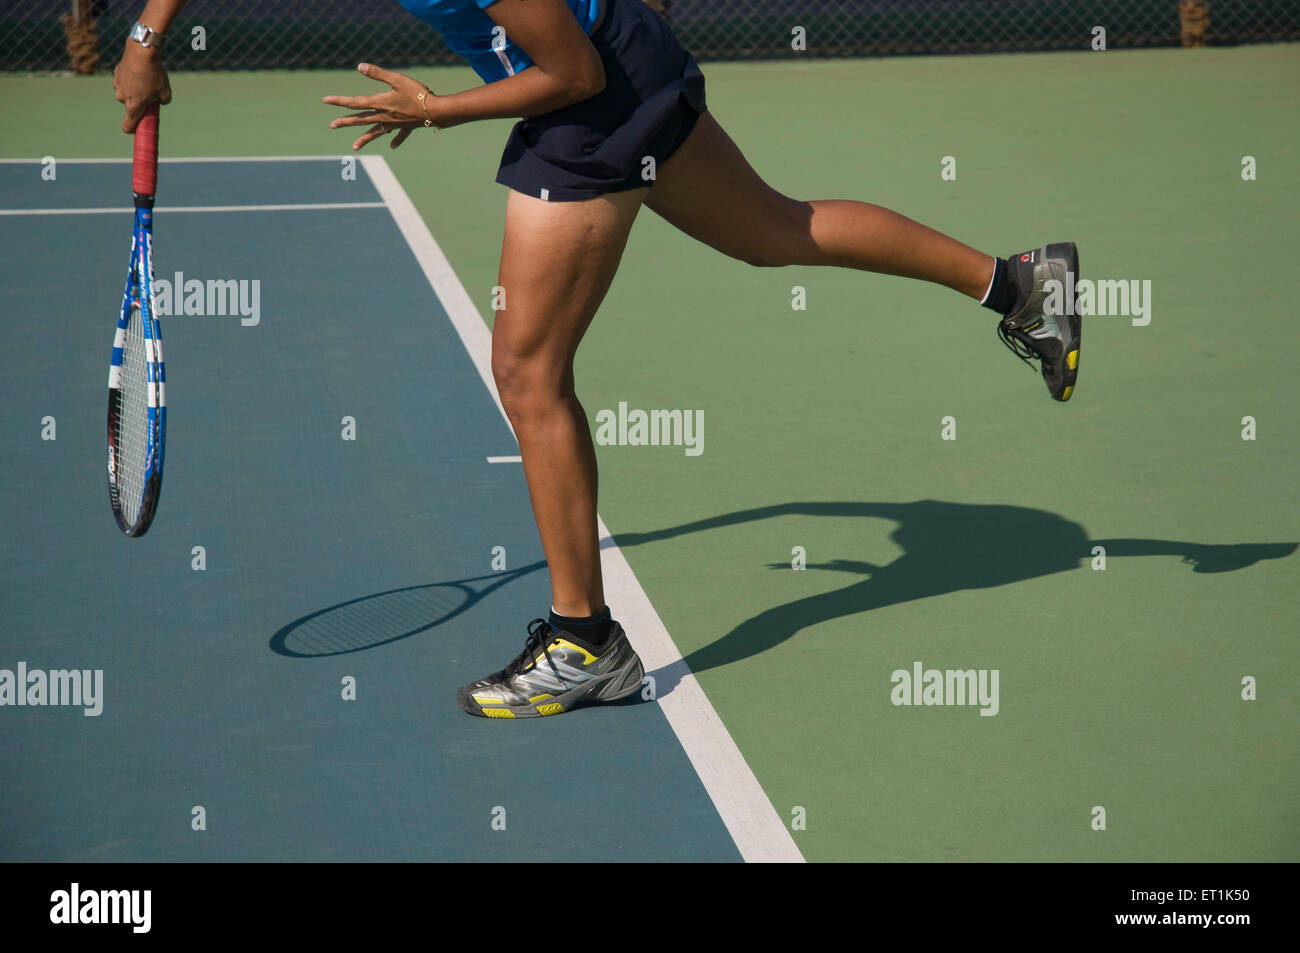 Frau spielt tennis Stockfoto